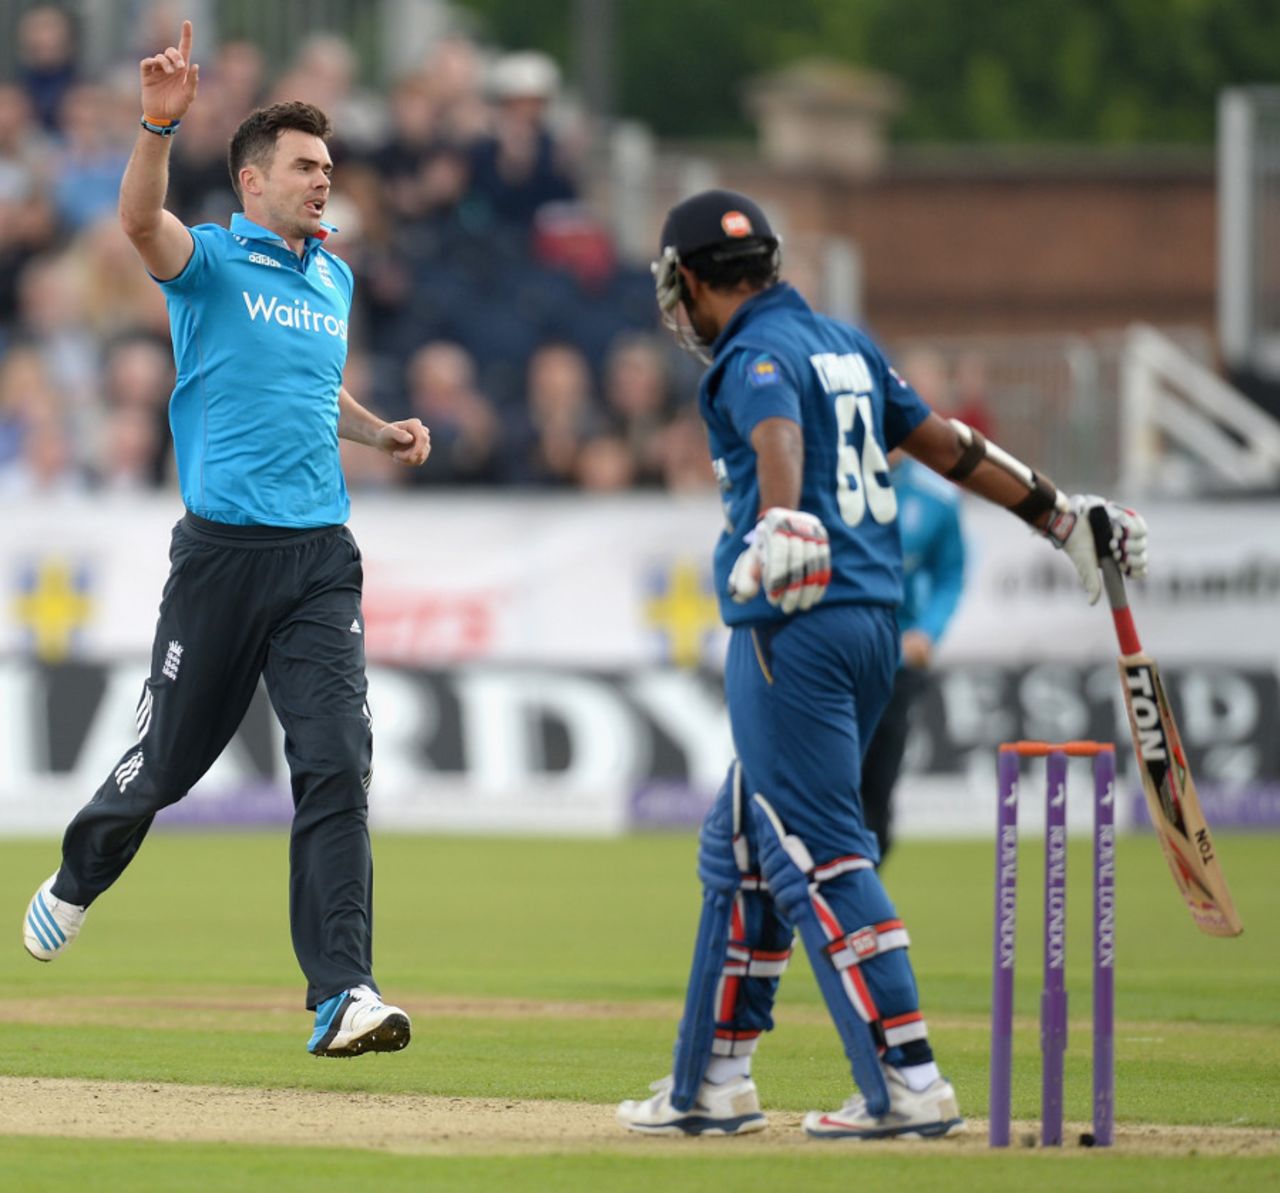 James Anderson had Lahiru Thirimanne caught at slip, England v Sri Lanka, 2nd ODI, Chester-le-Street, May 25, 2014